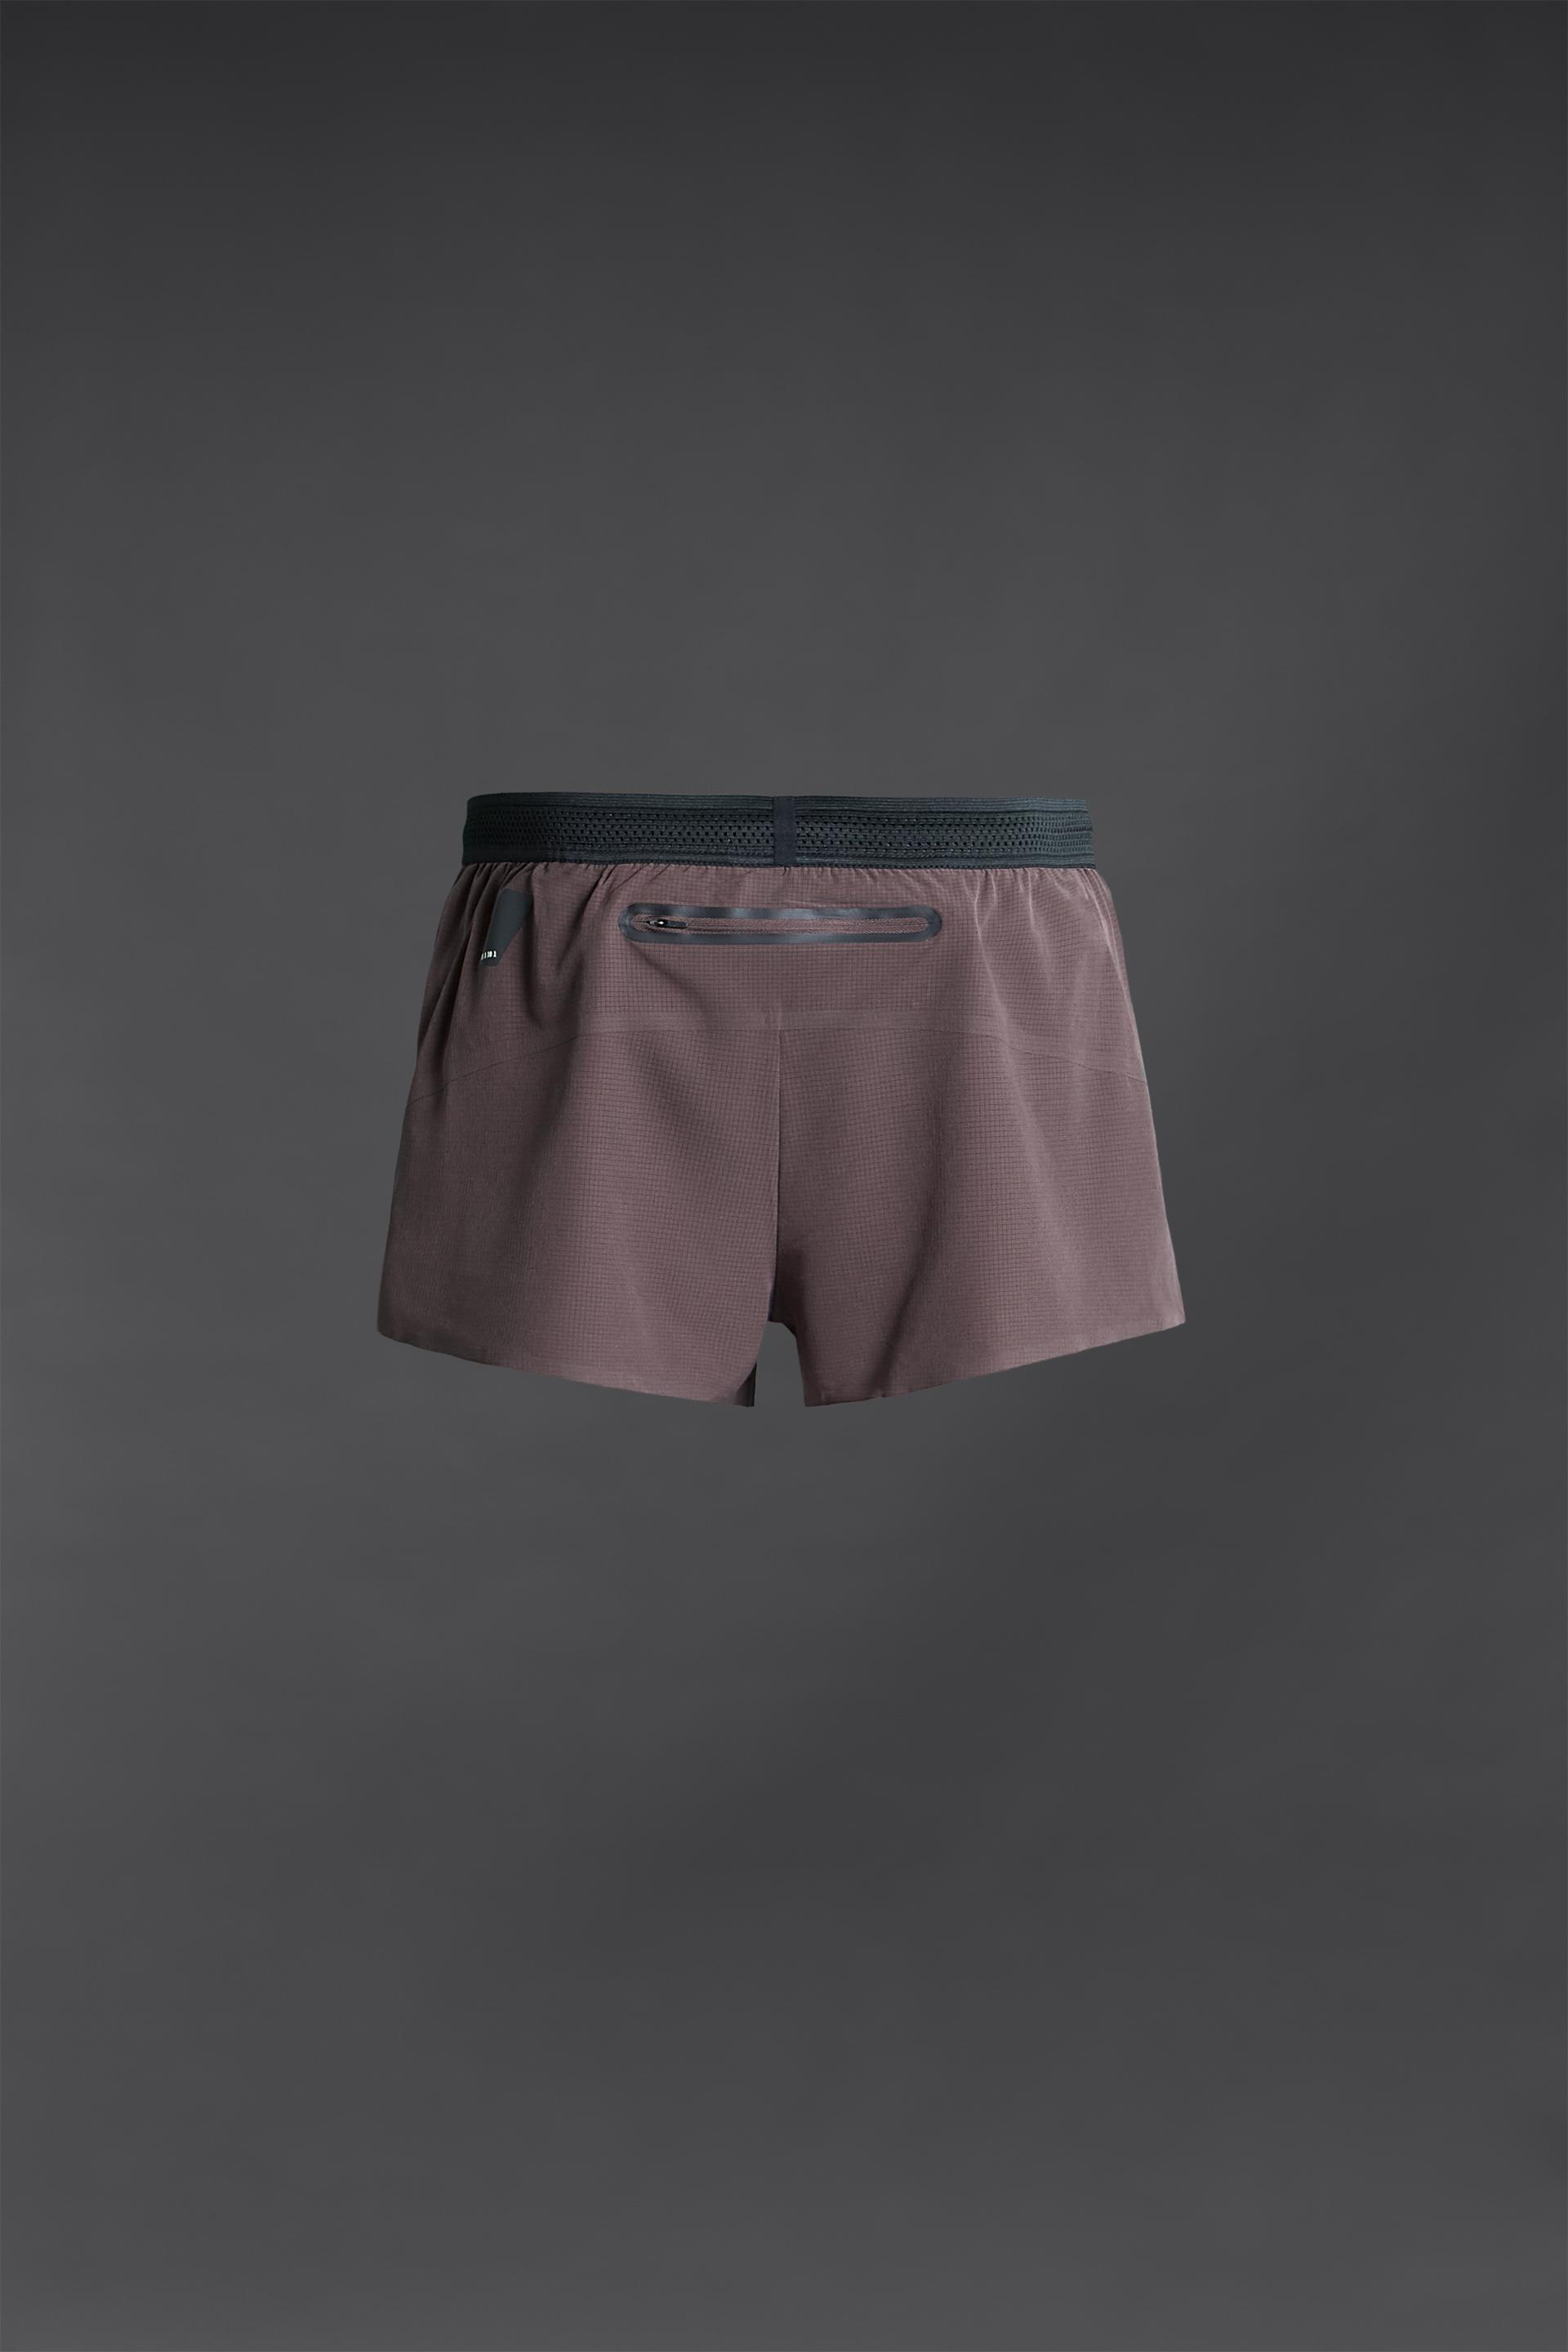 Quality Zara boxer shorts\quality three (3) in one yarrison Accra  Metropolitan - Speedgh